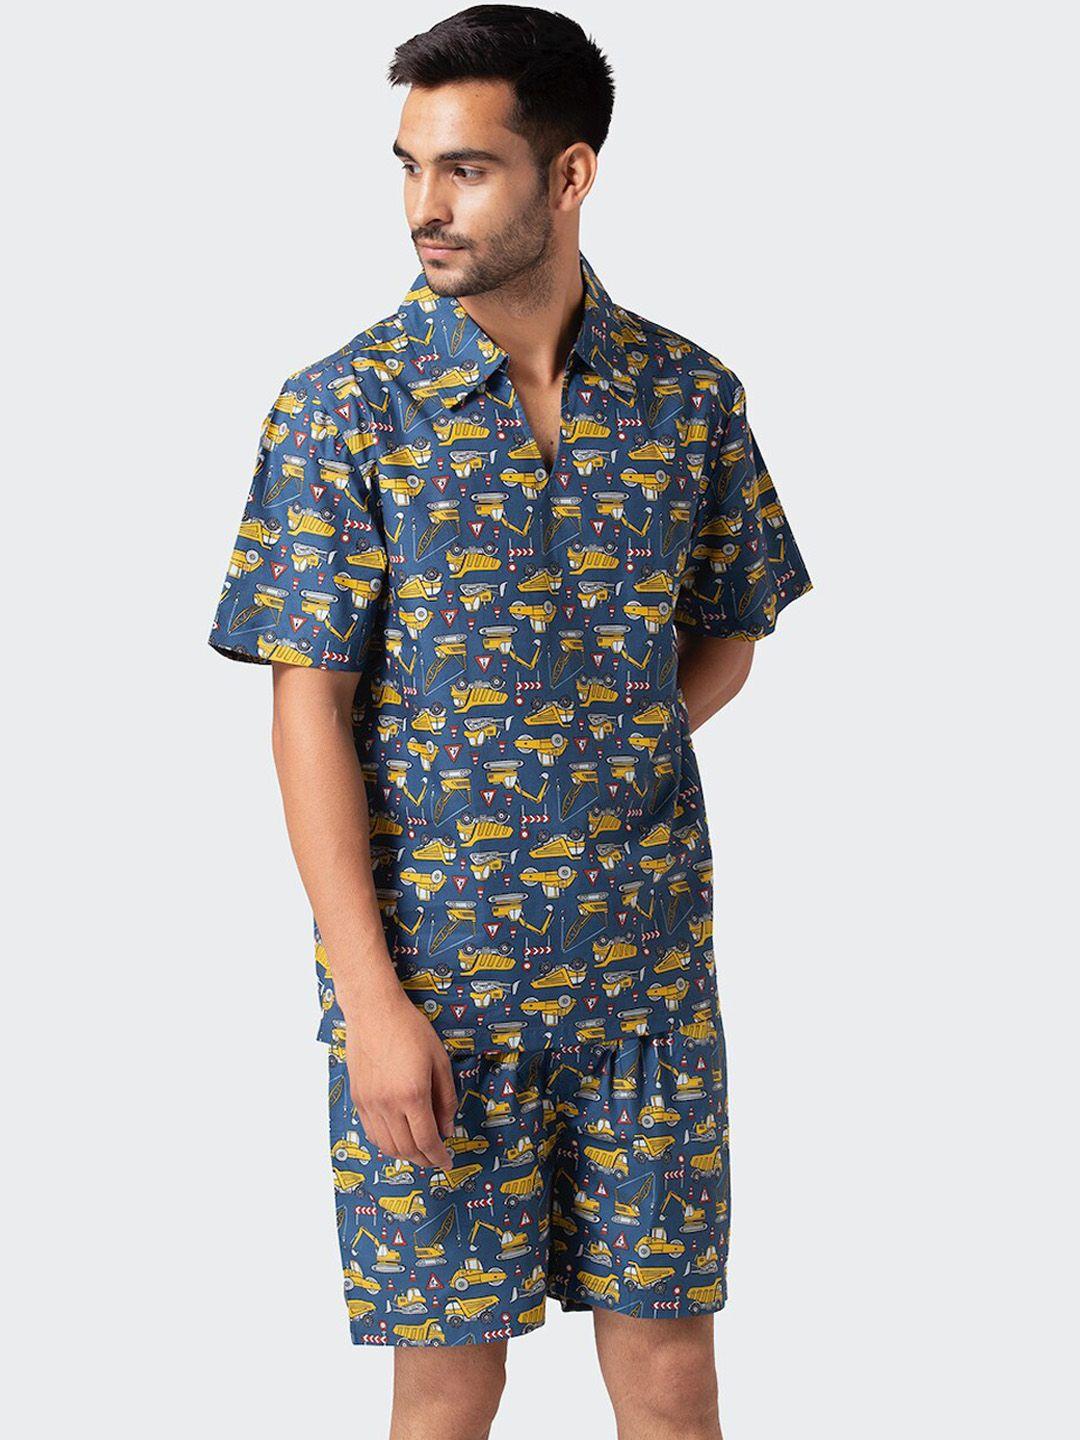 fluffalump men navy blue & yellow printed night suit